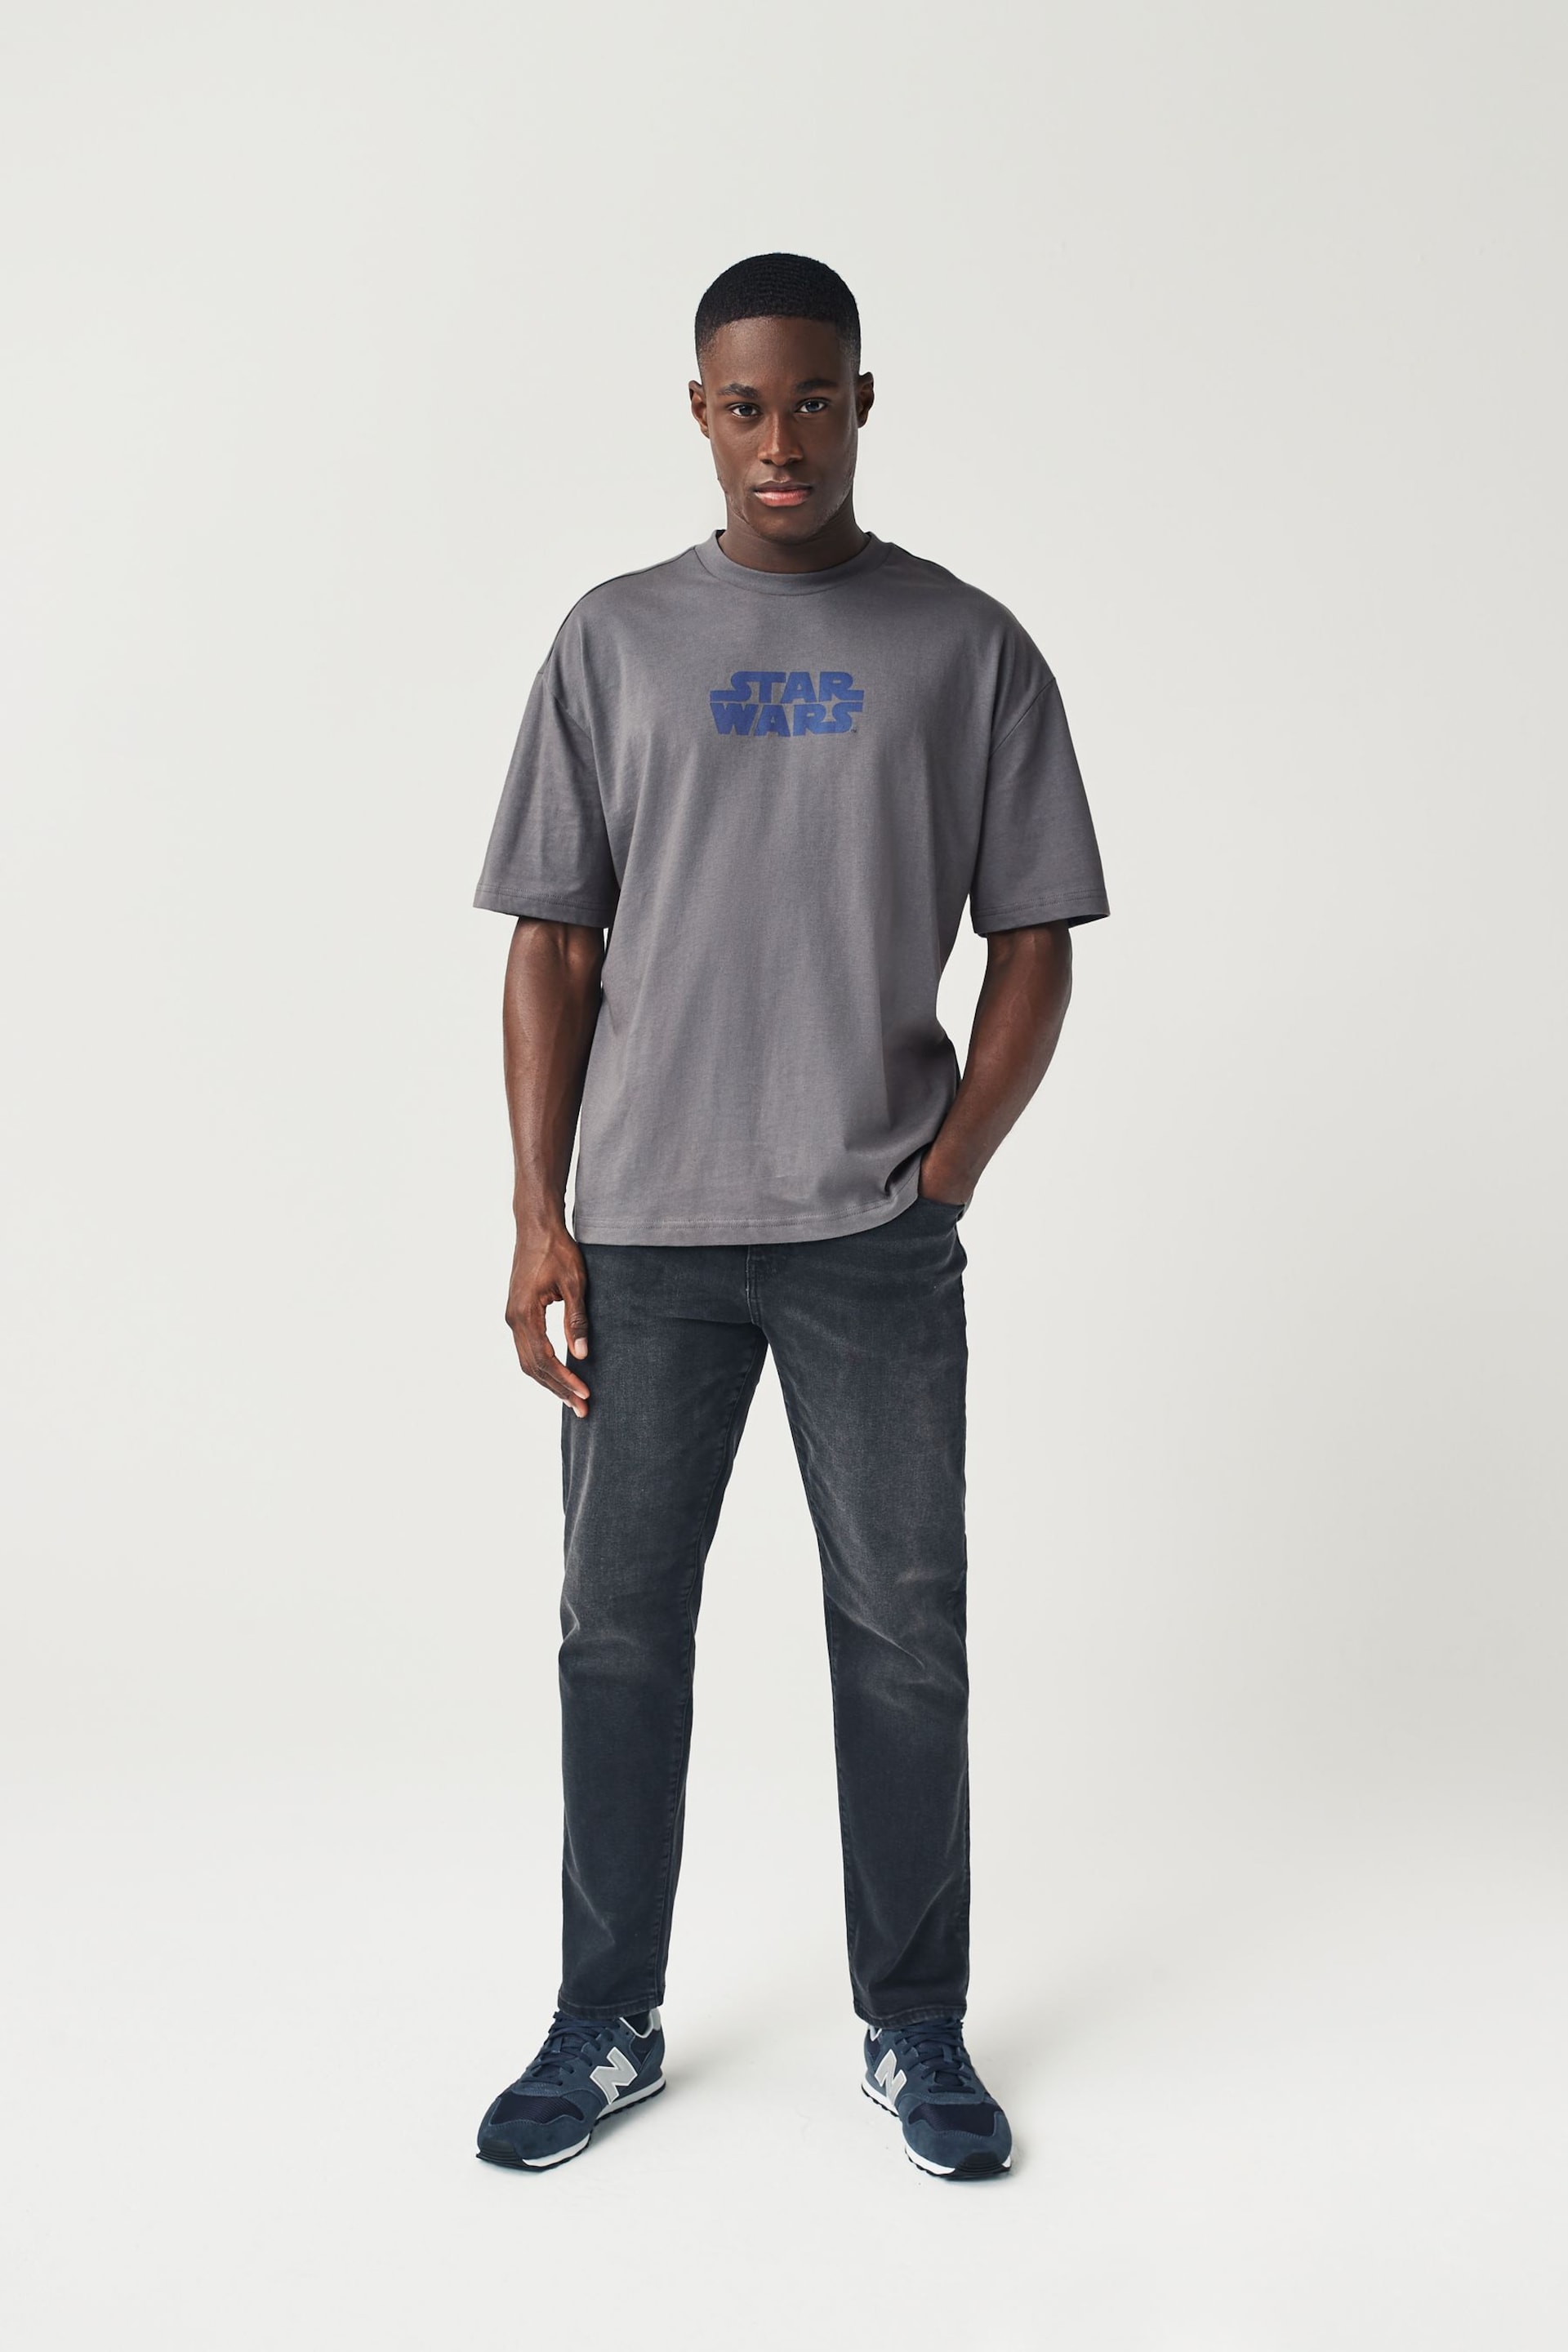 Grey Star Wars Licence T-Shirt - Image 3 of 7